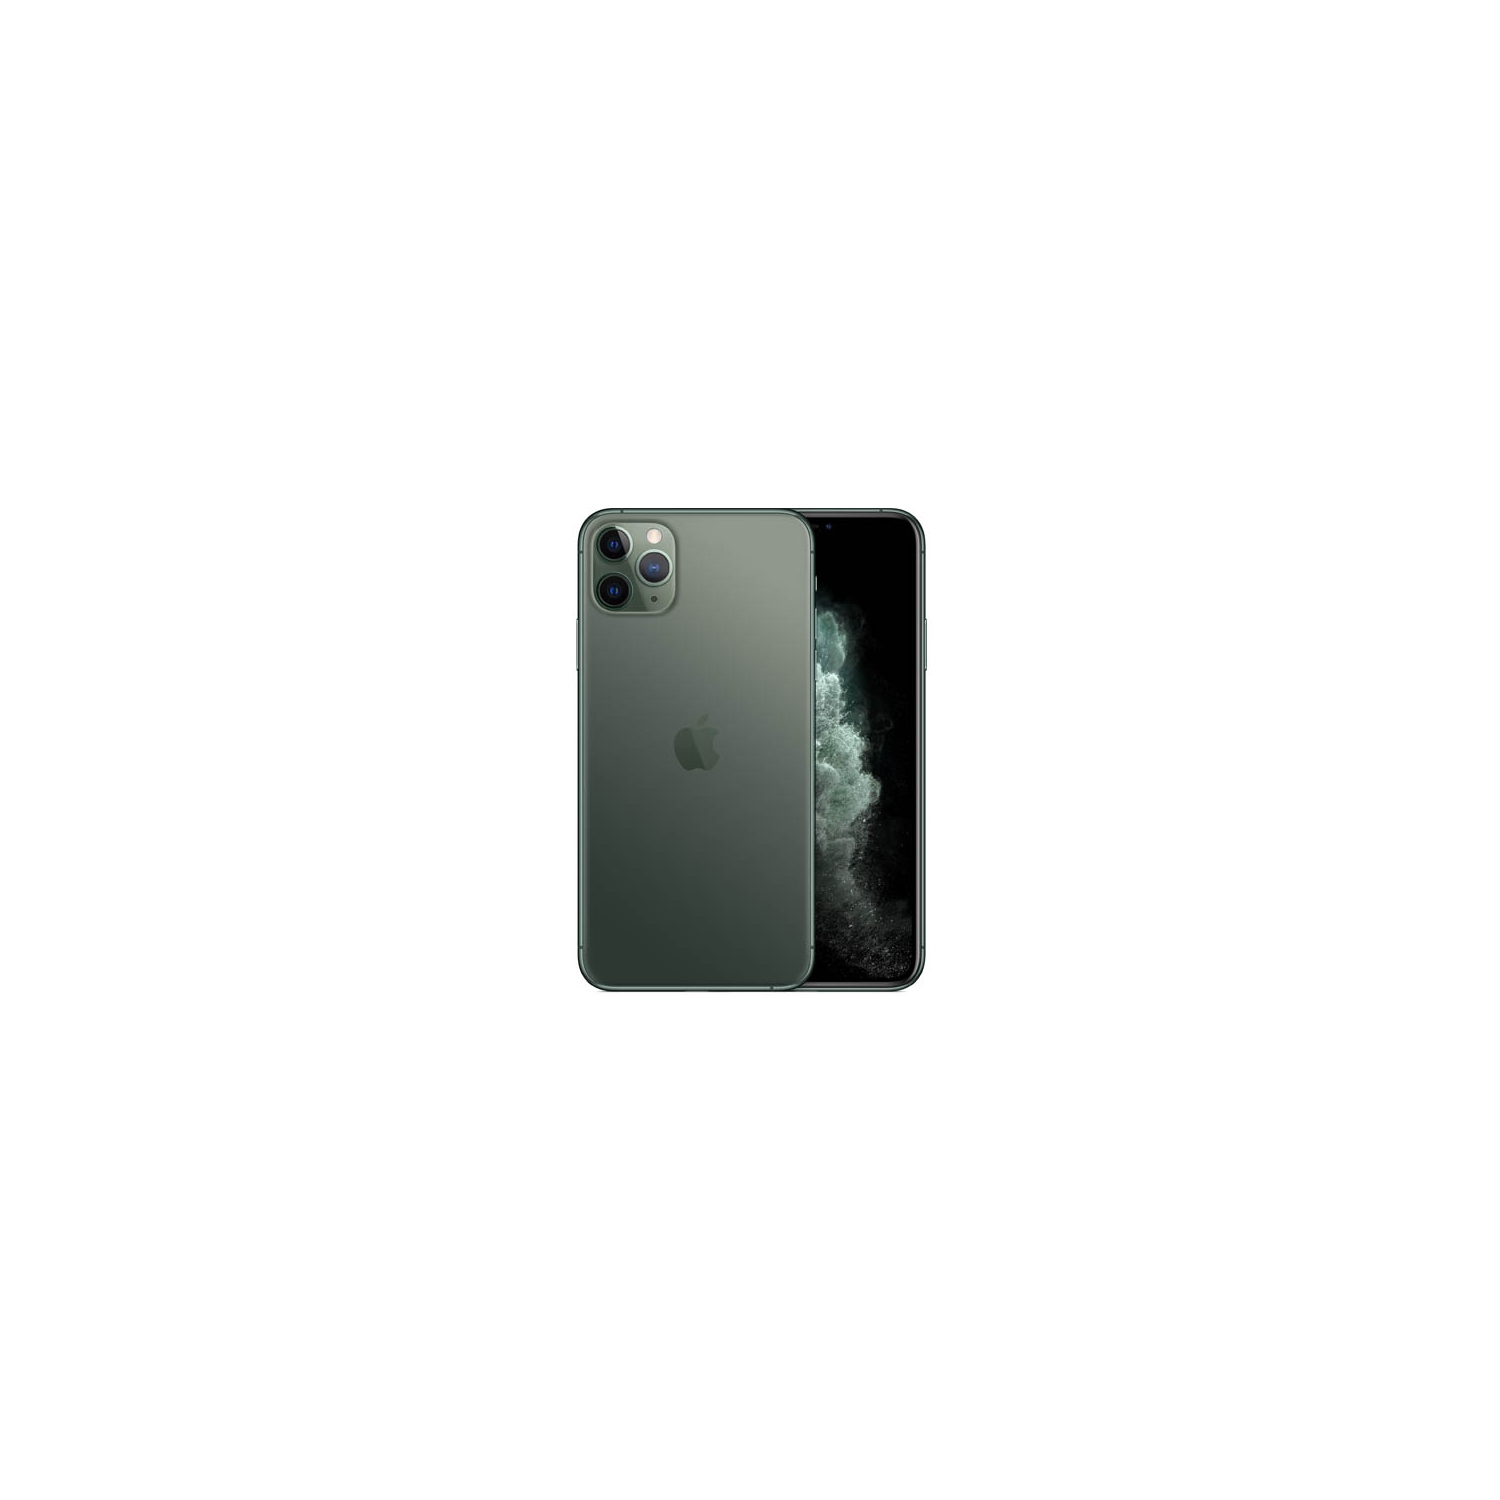 Refurbished (Good) - Apple iPhone 11 Pro Max 256GB Smartphone - Midnight Green - Unlocked